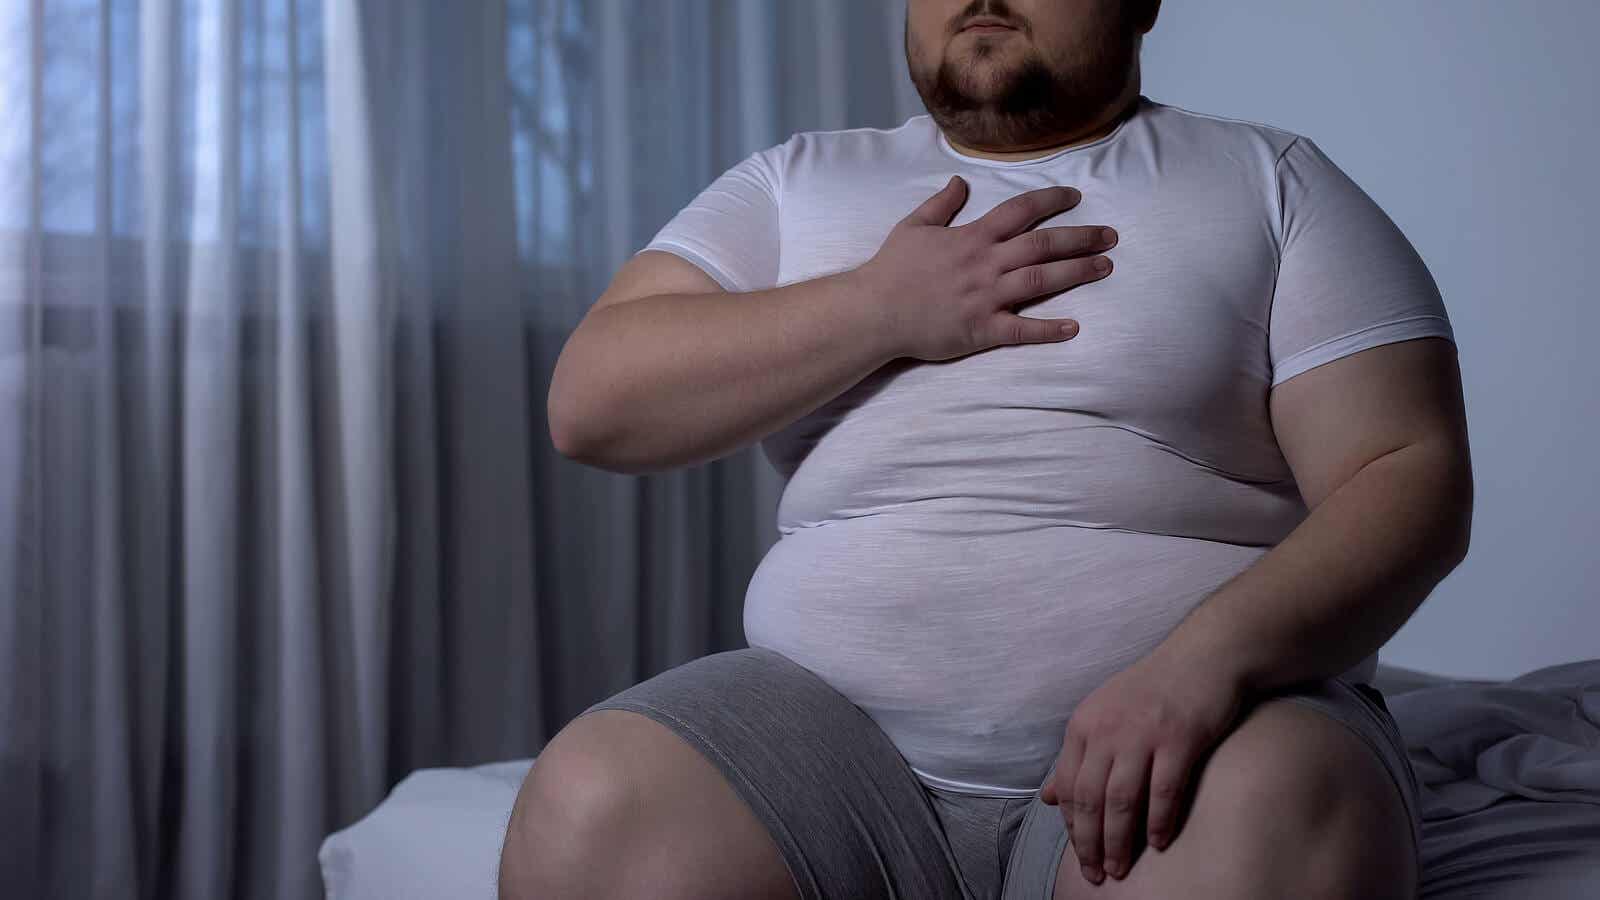 ¿La obesidad reduce la esperanza de vida?